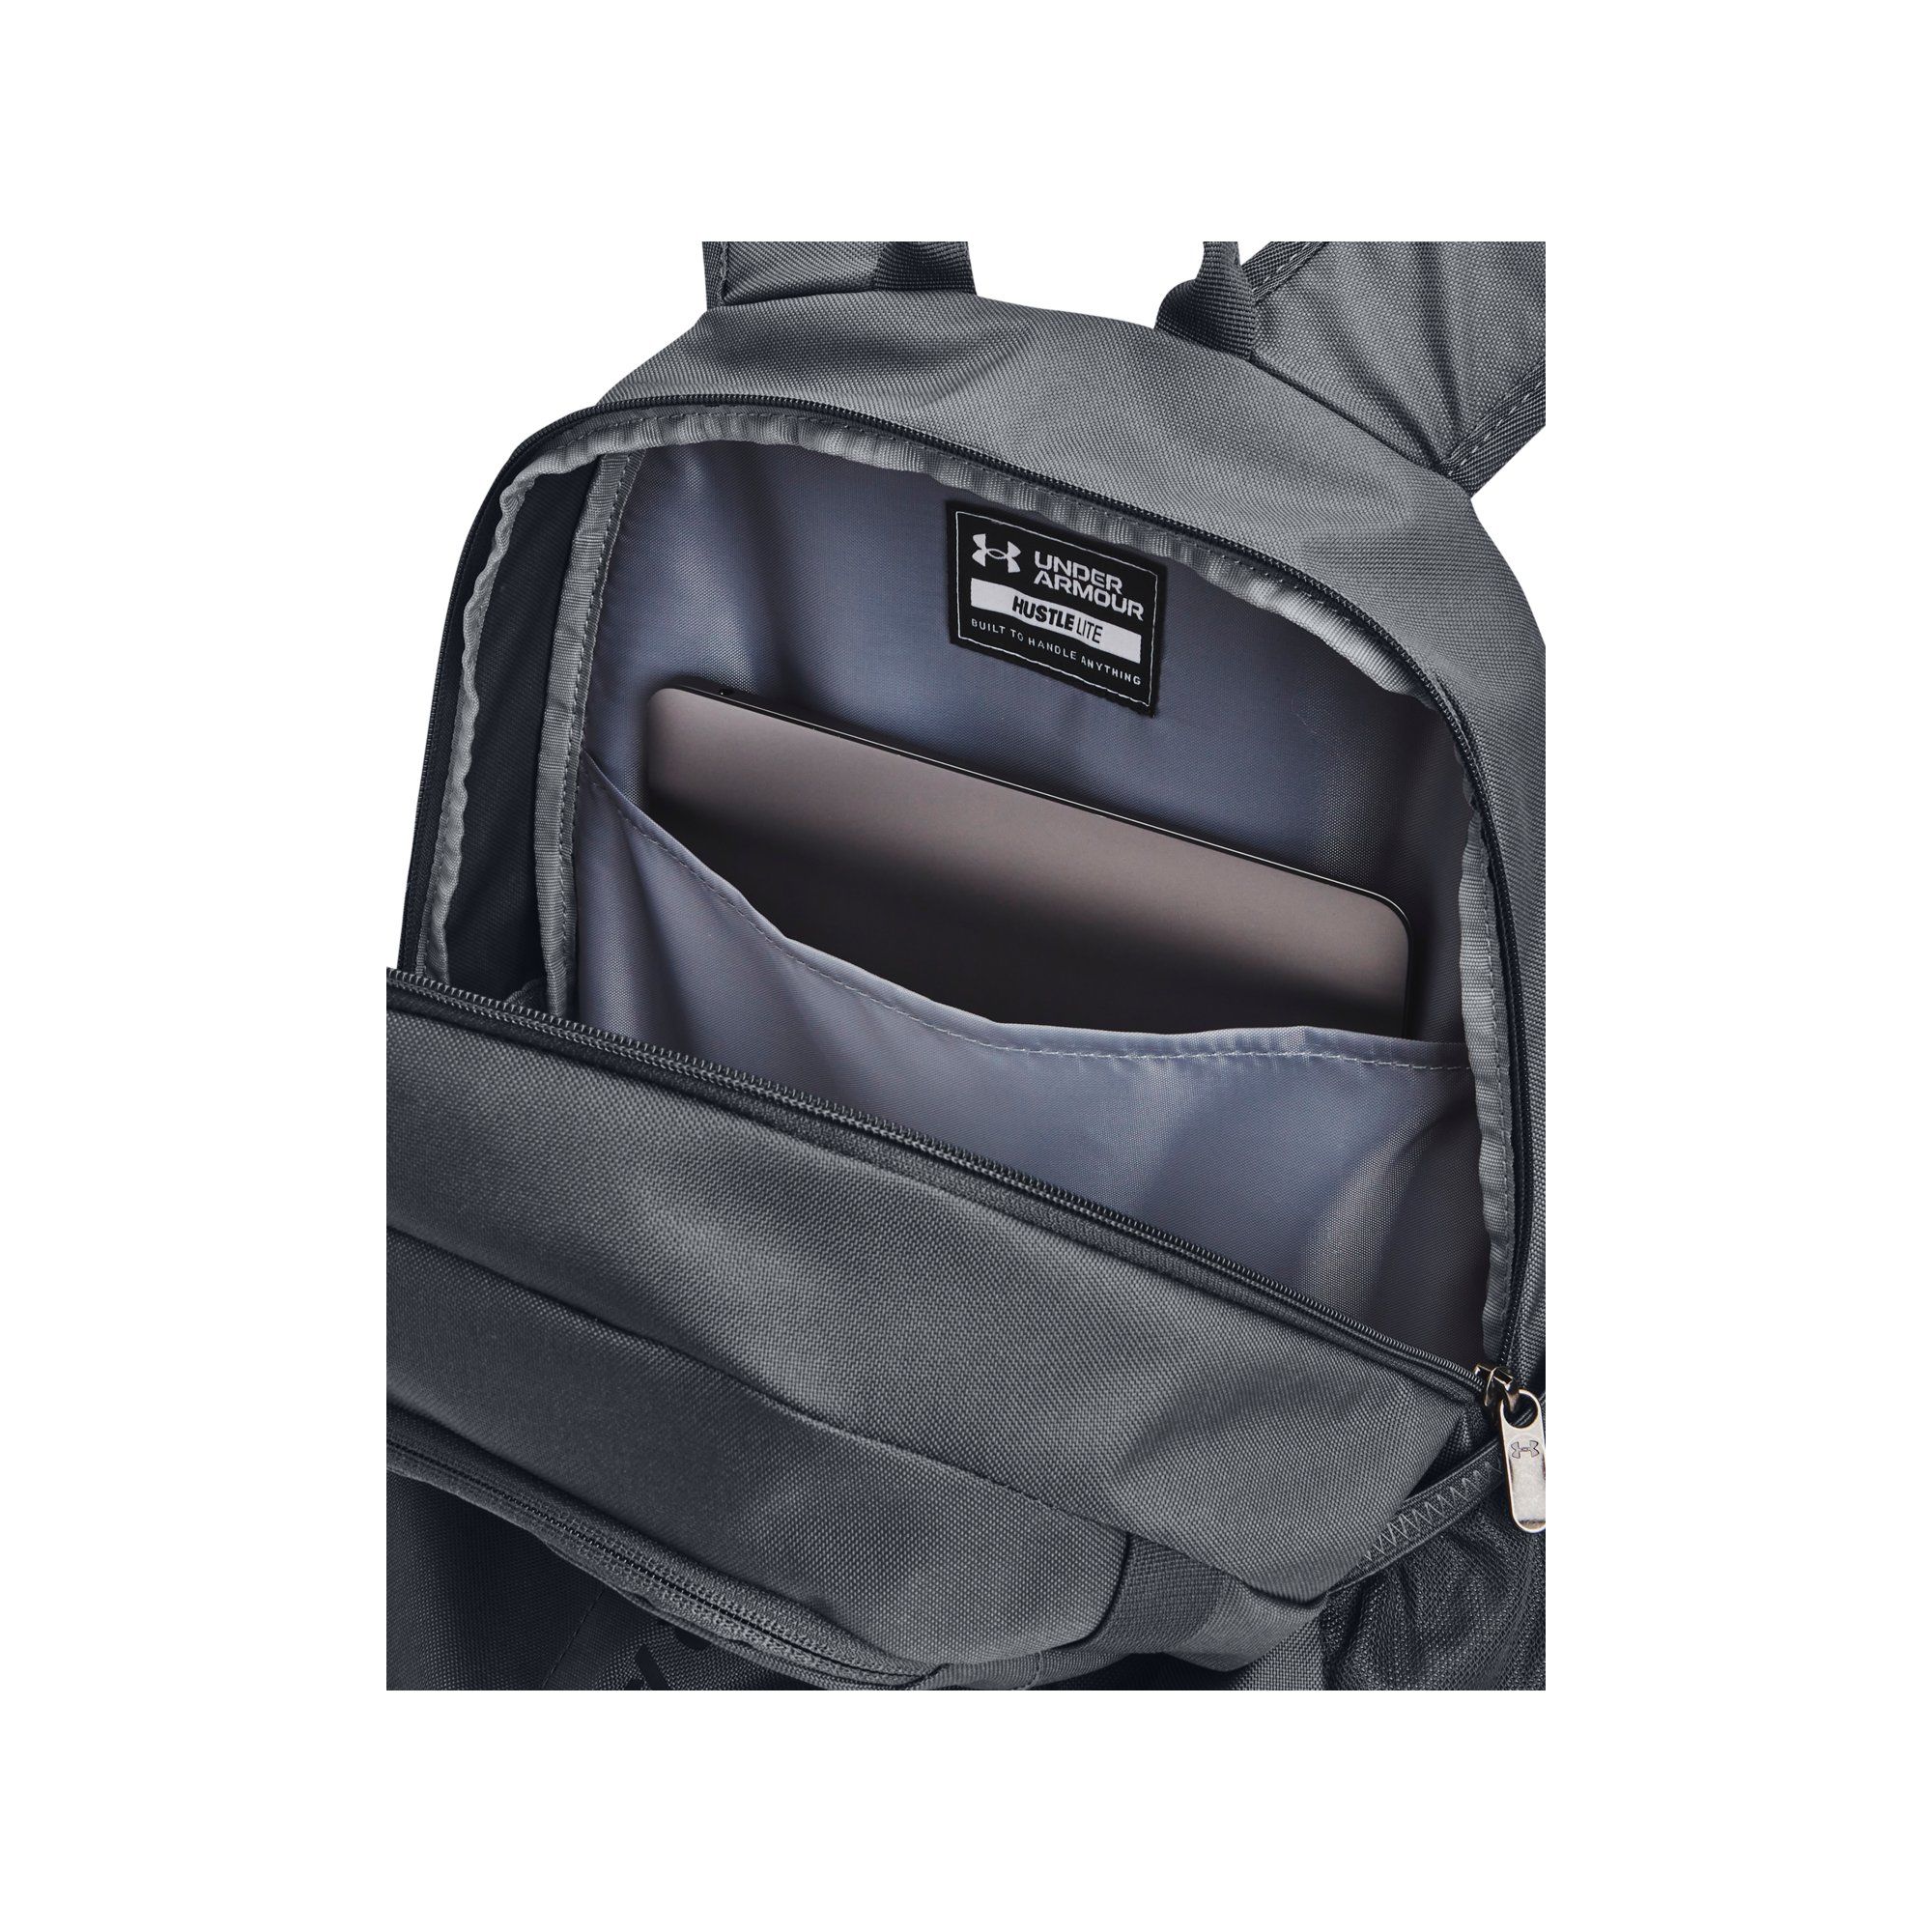  Under Armour Hustle Lite Backpack - Grey 